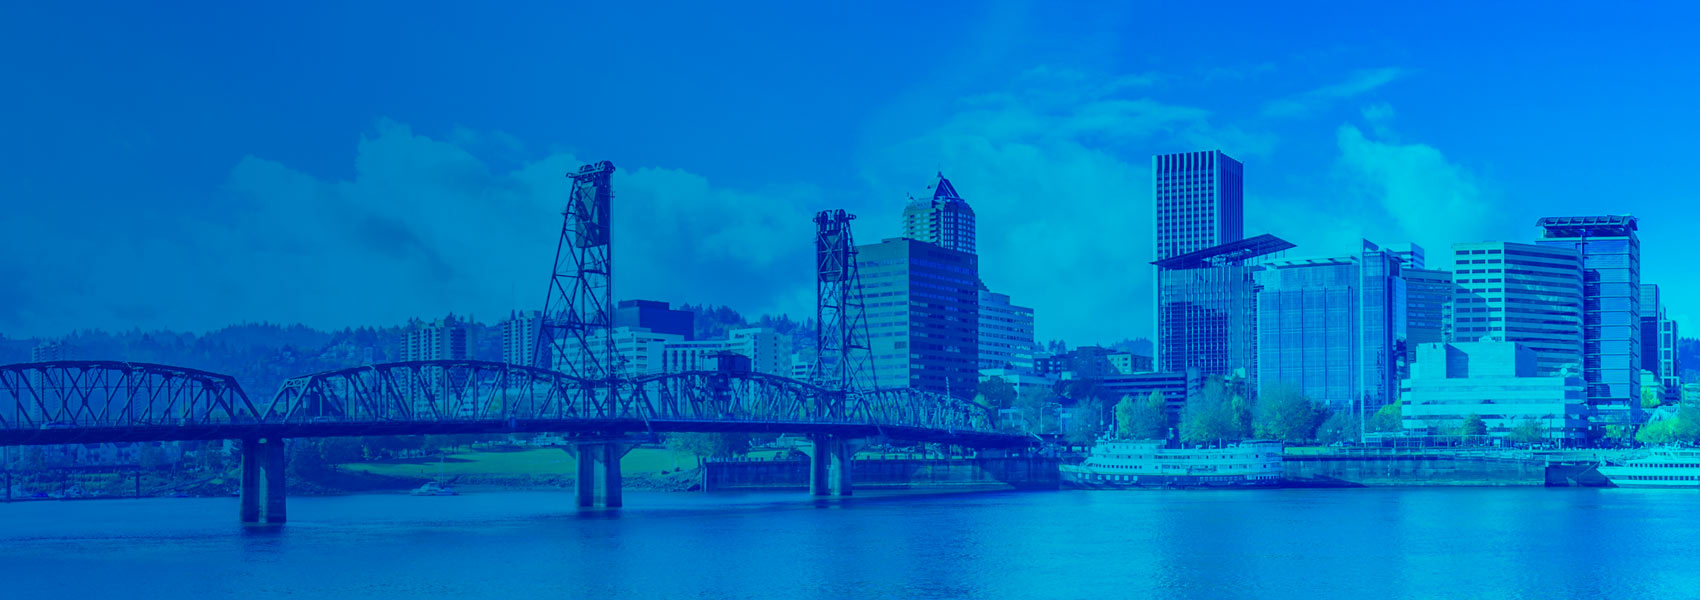 Portland skyline - blue